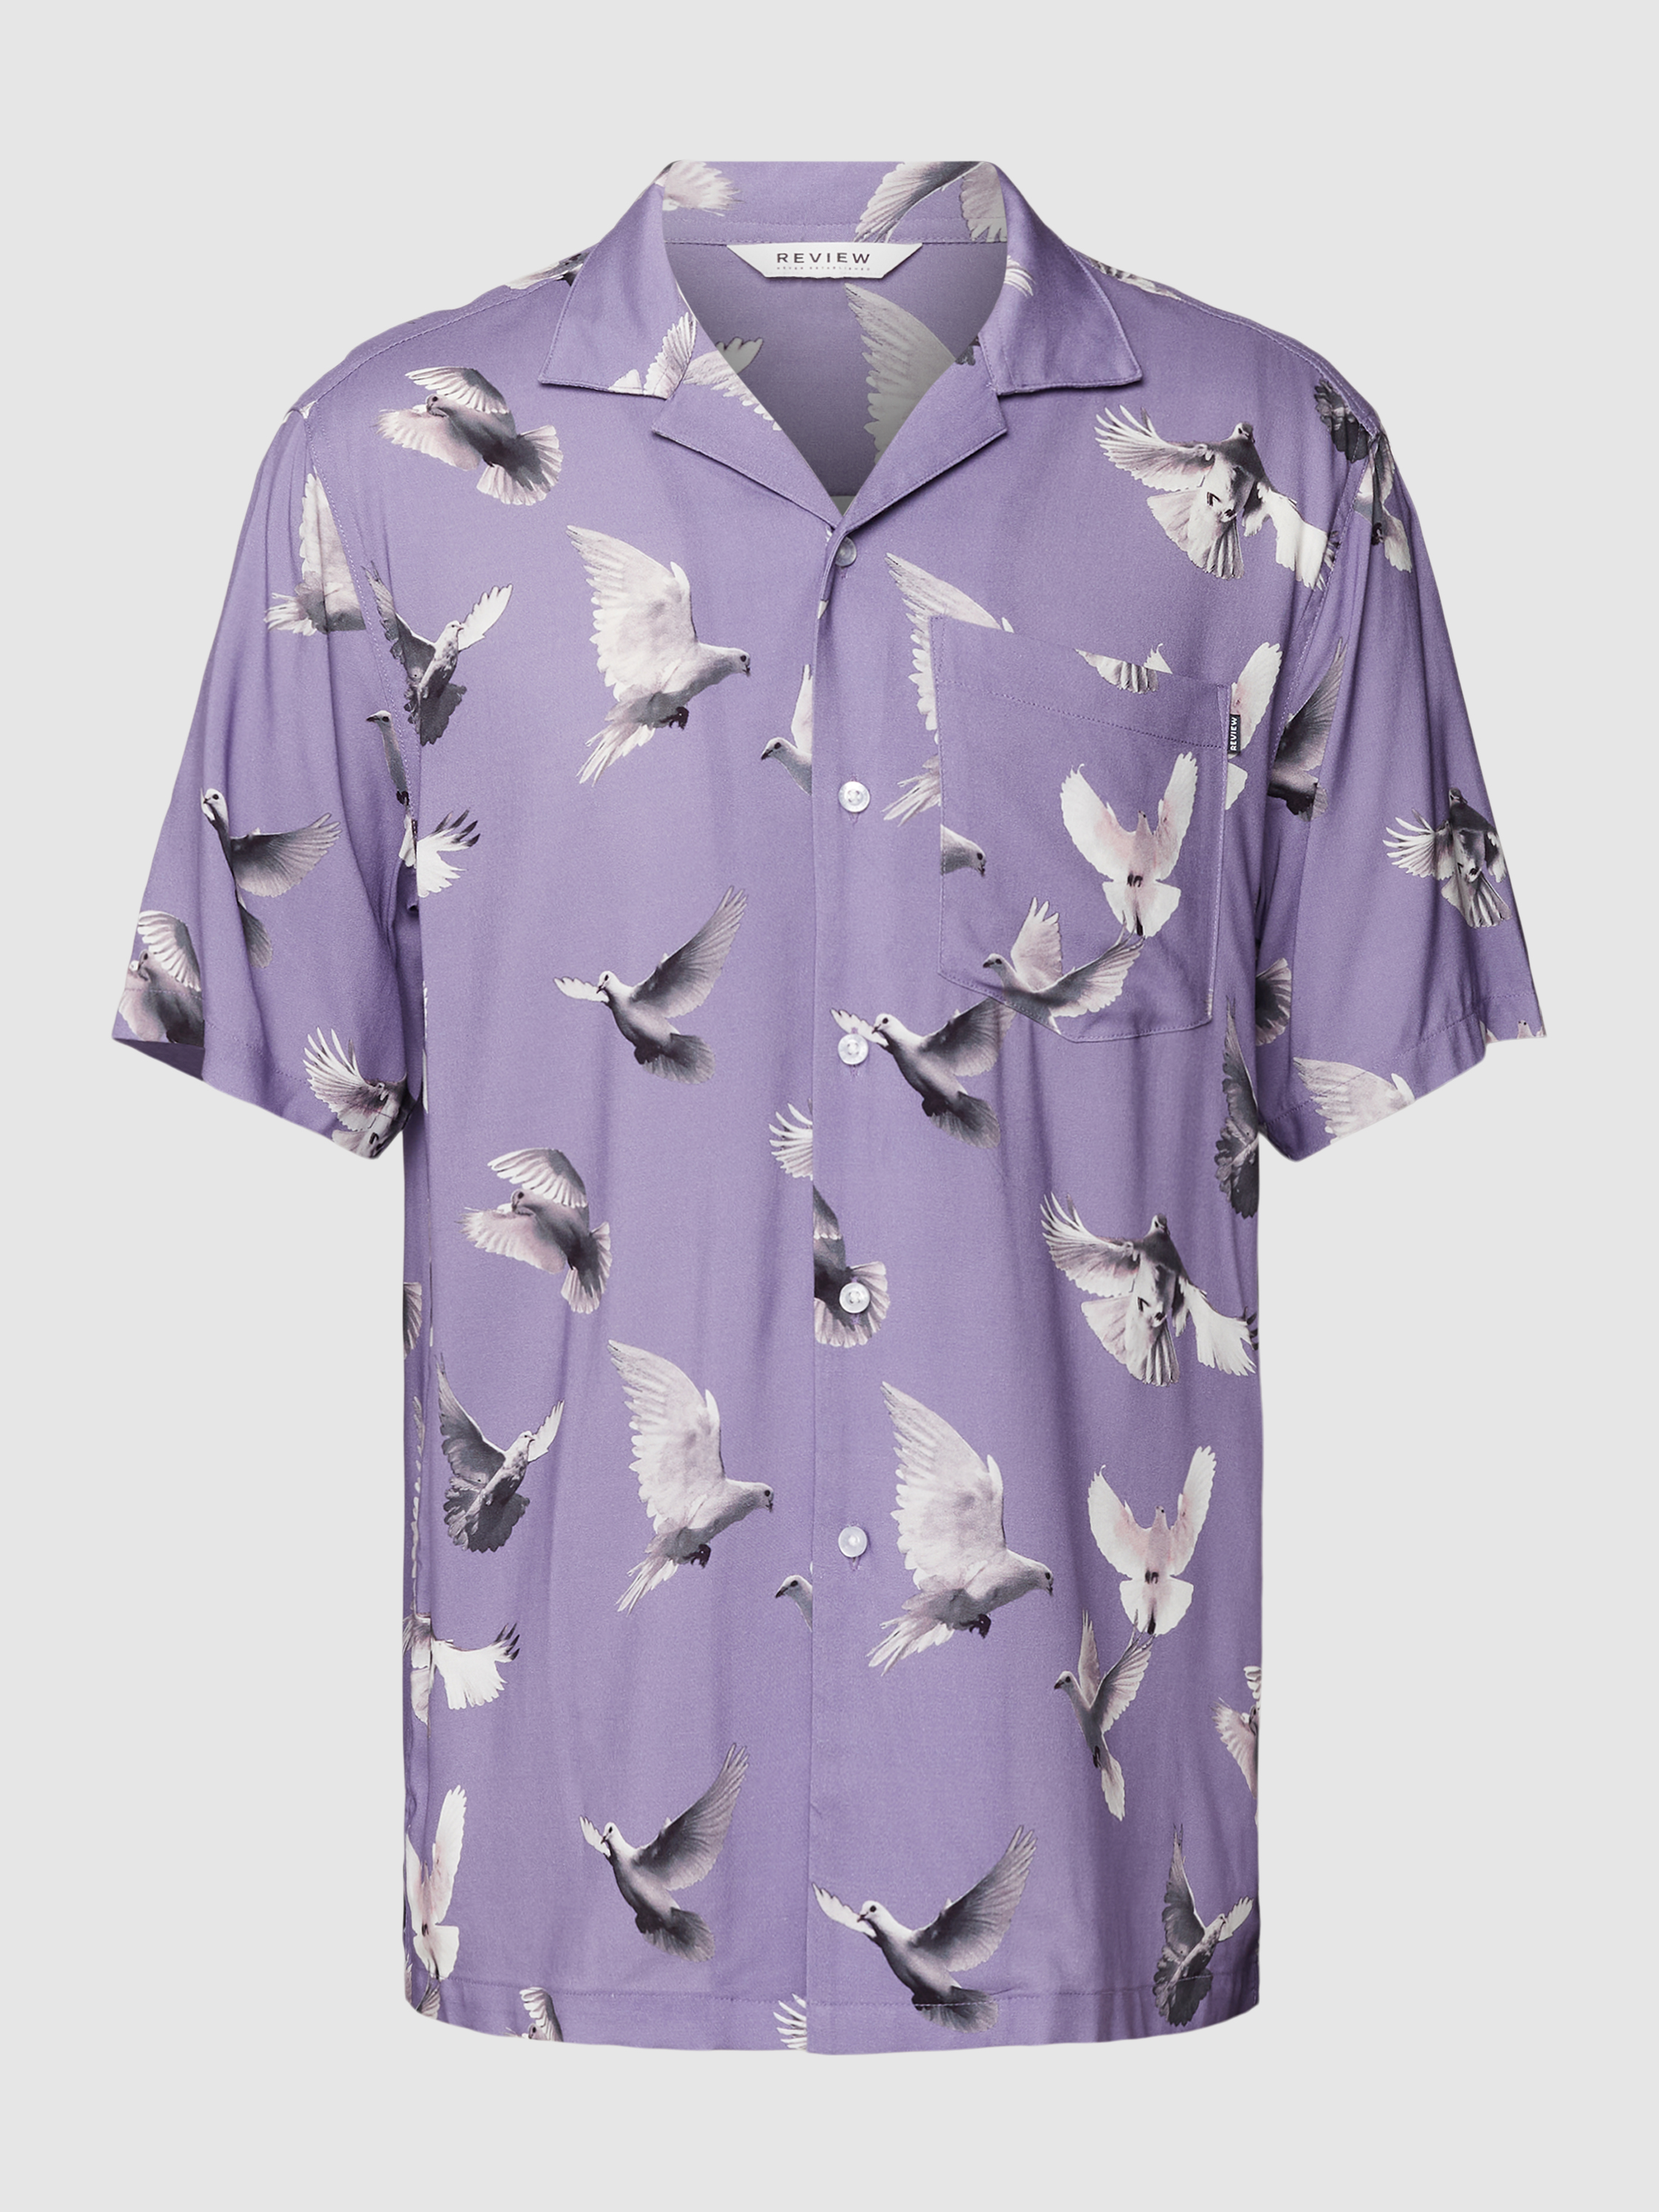 Рубашка мужская Review 1783523 фиолетовая L (доставка из-за рубежа)